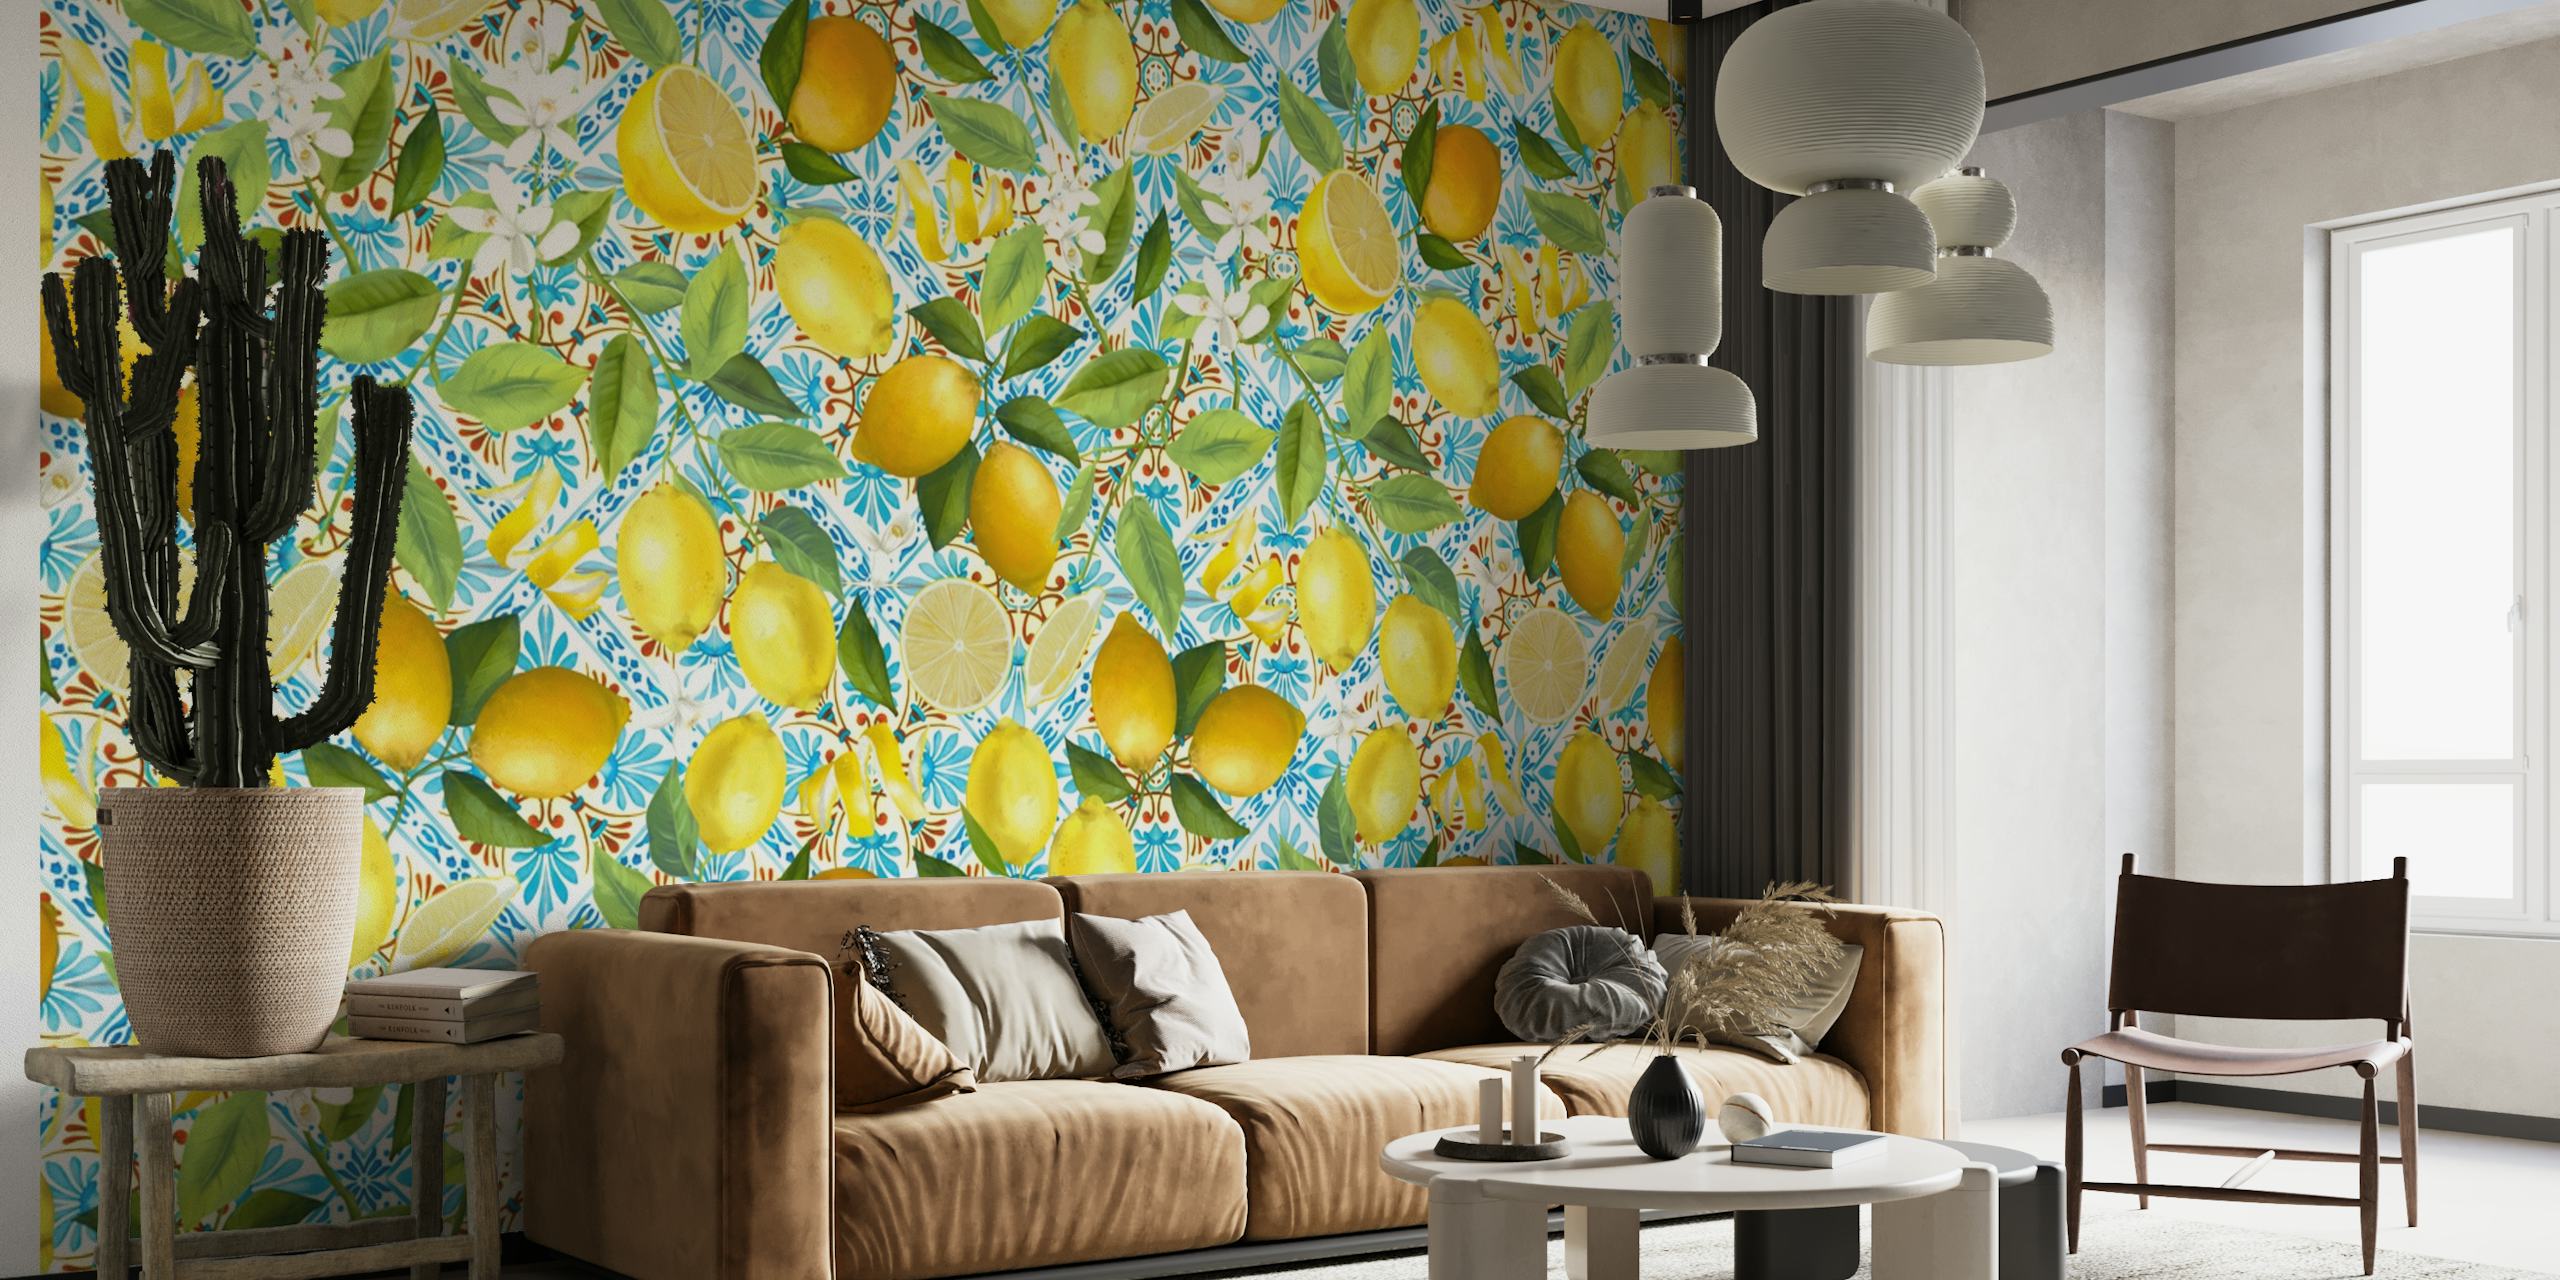 Mediterranean Tiles And Fruits wallpaper